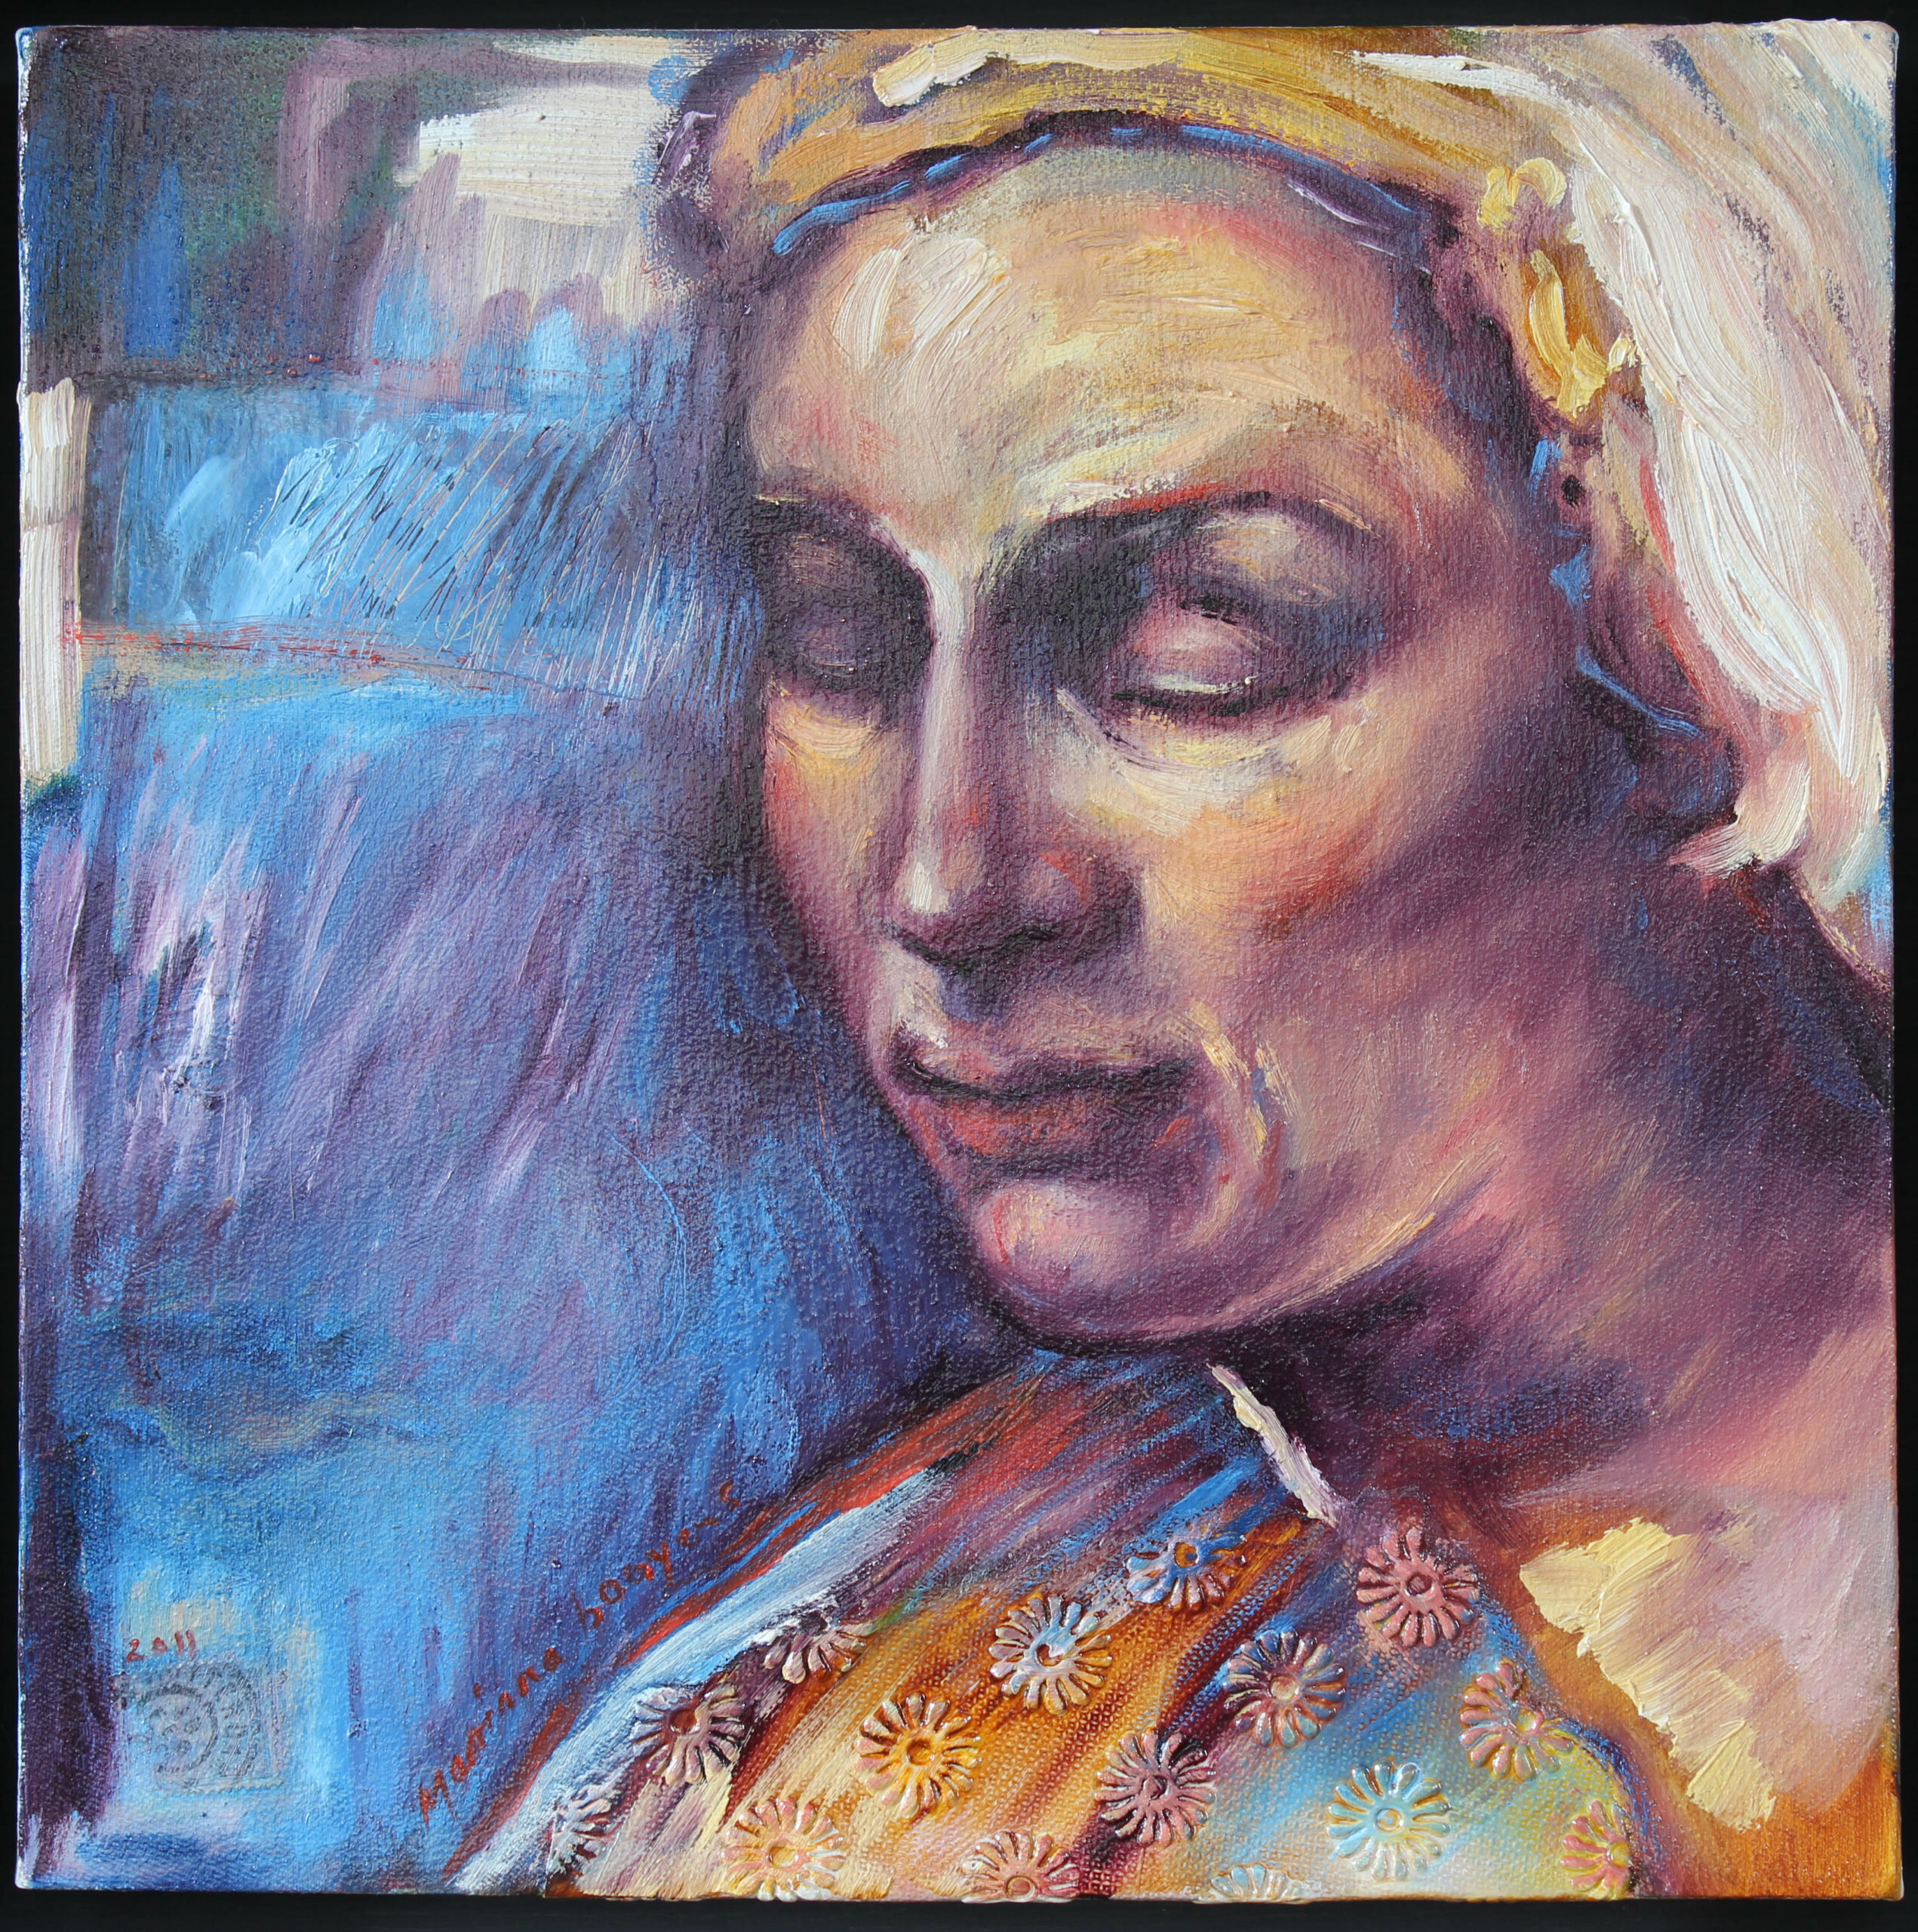 Painting a Portrait in Oil Colour